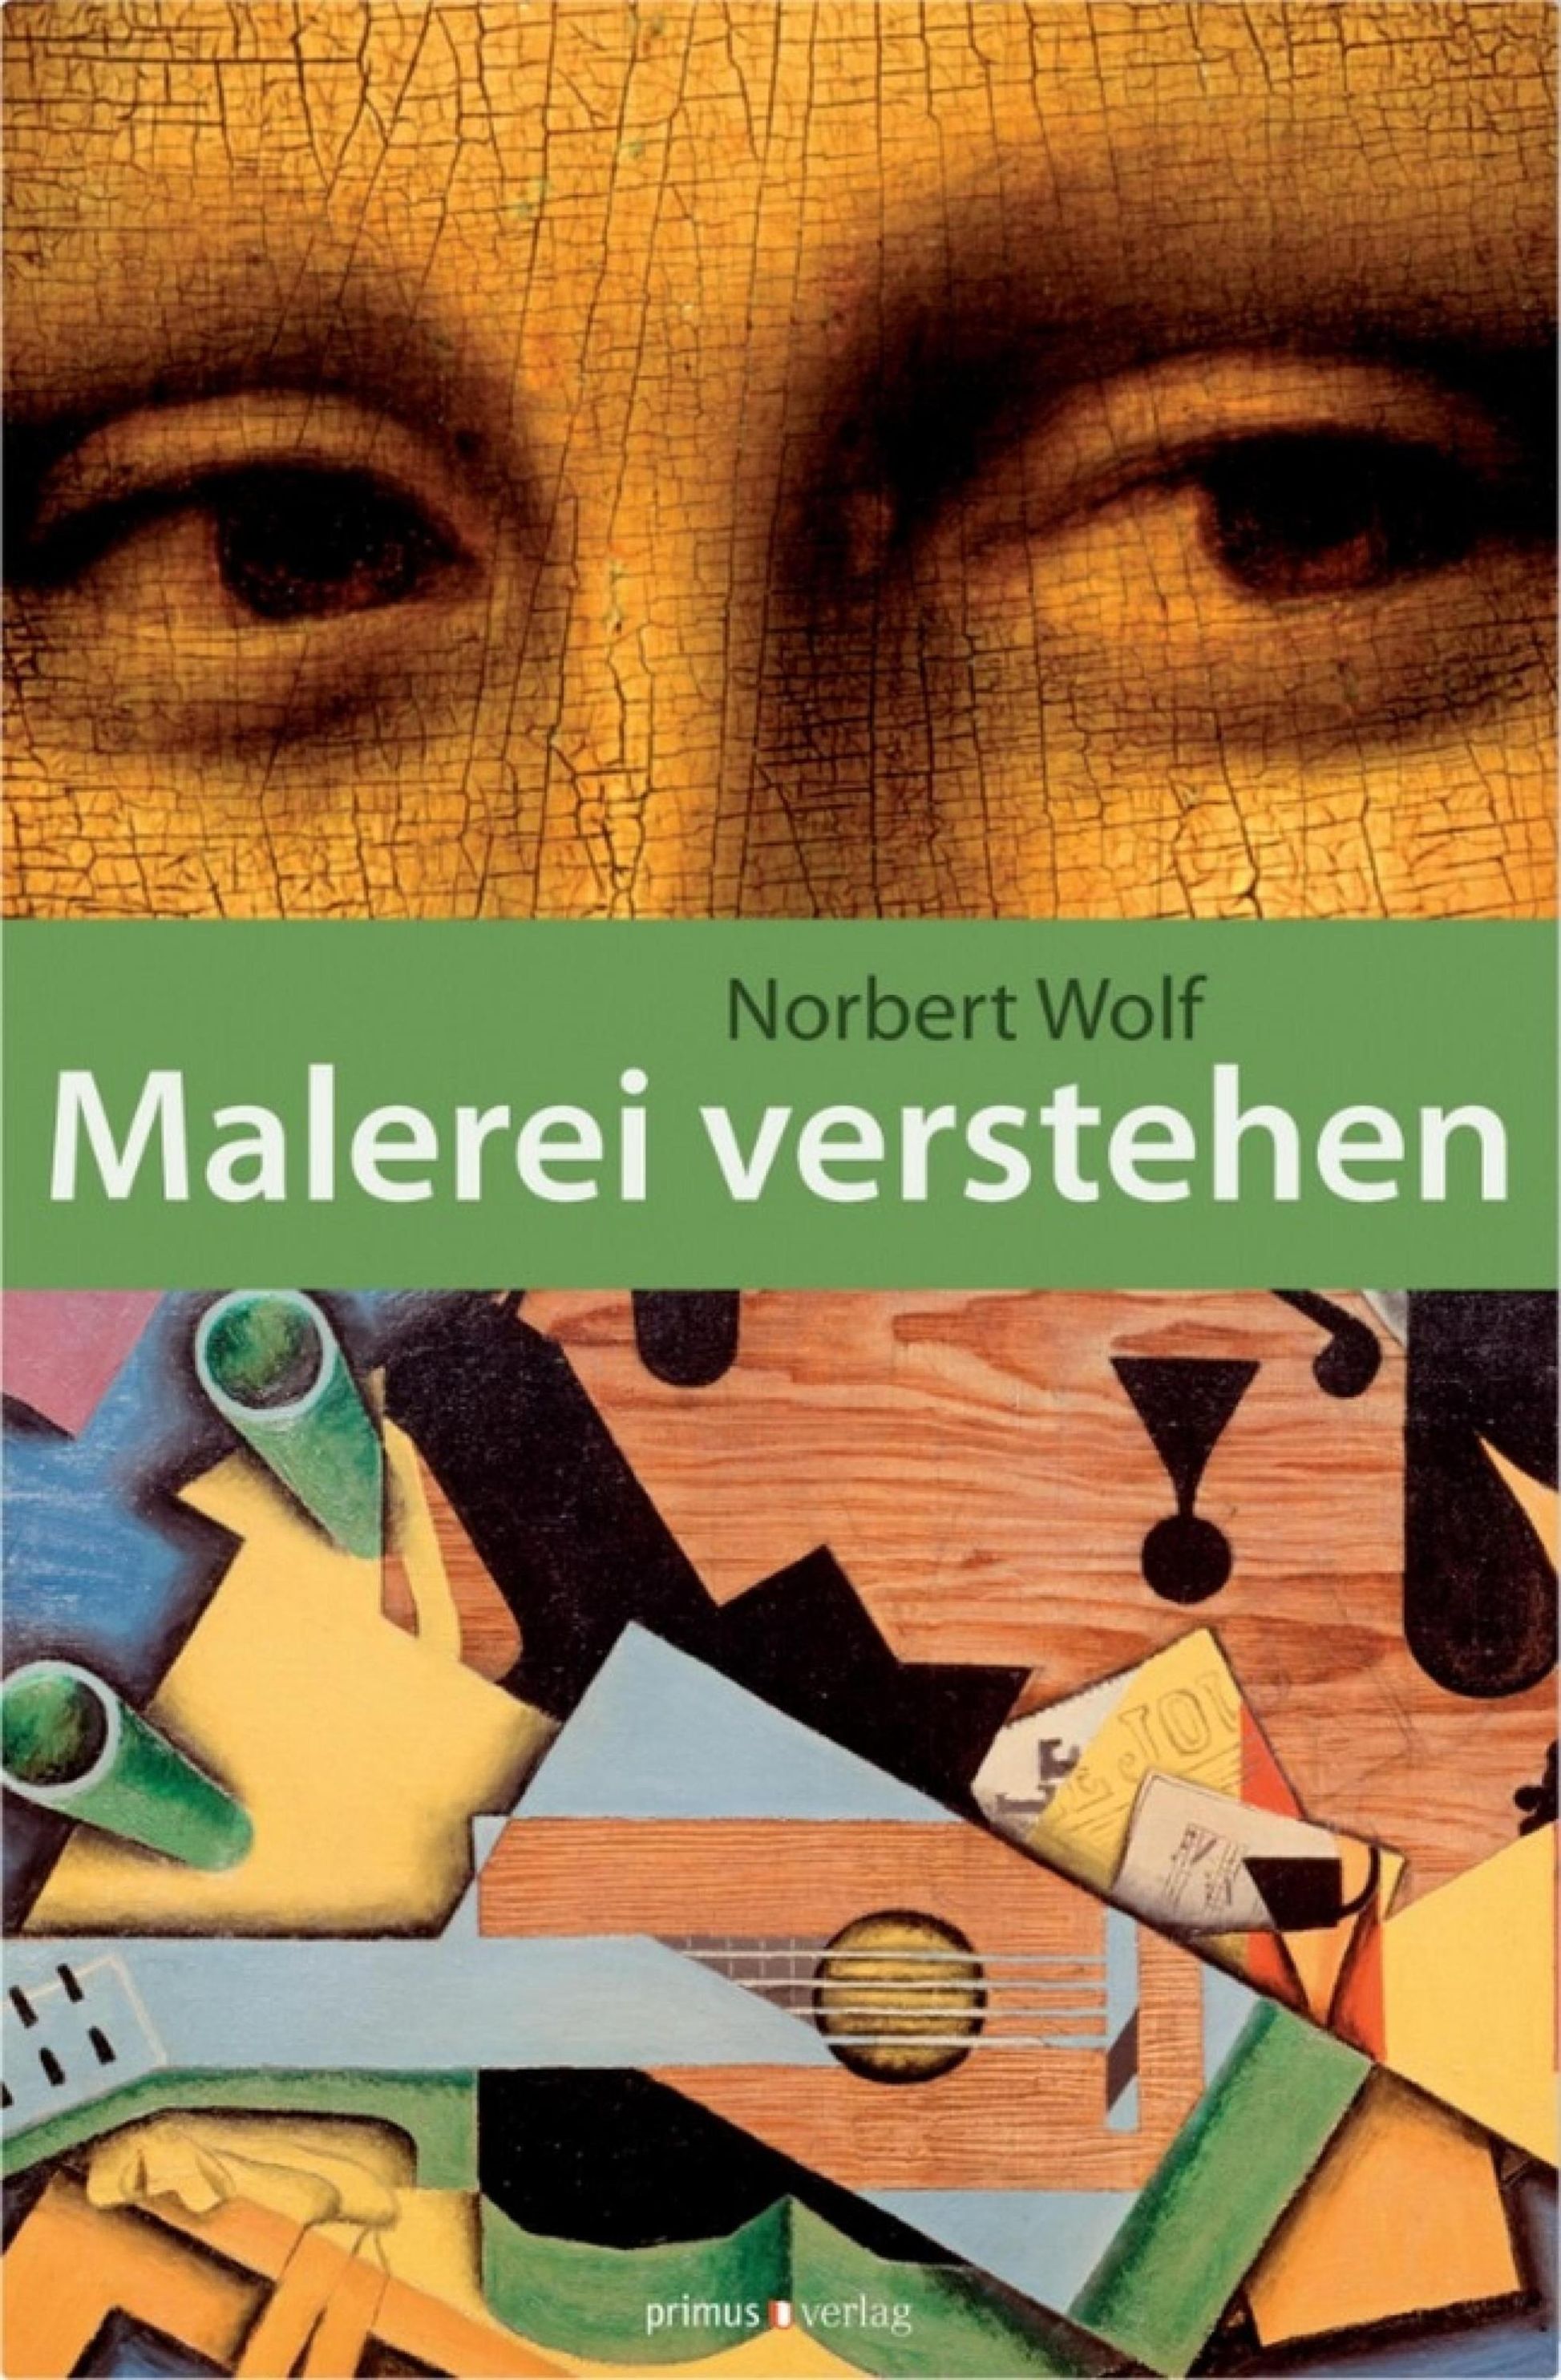 Malerei verstehen eBook v. Norbert Wolf | Weltbild